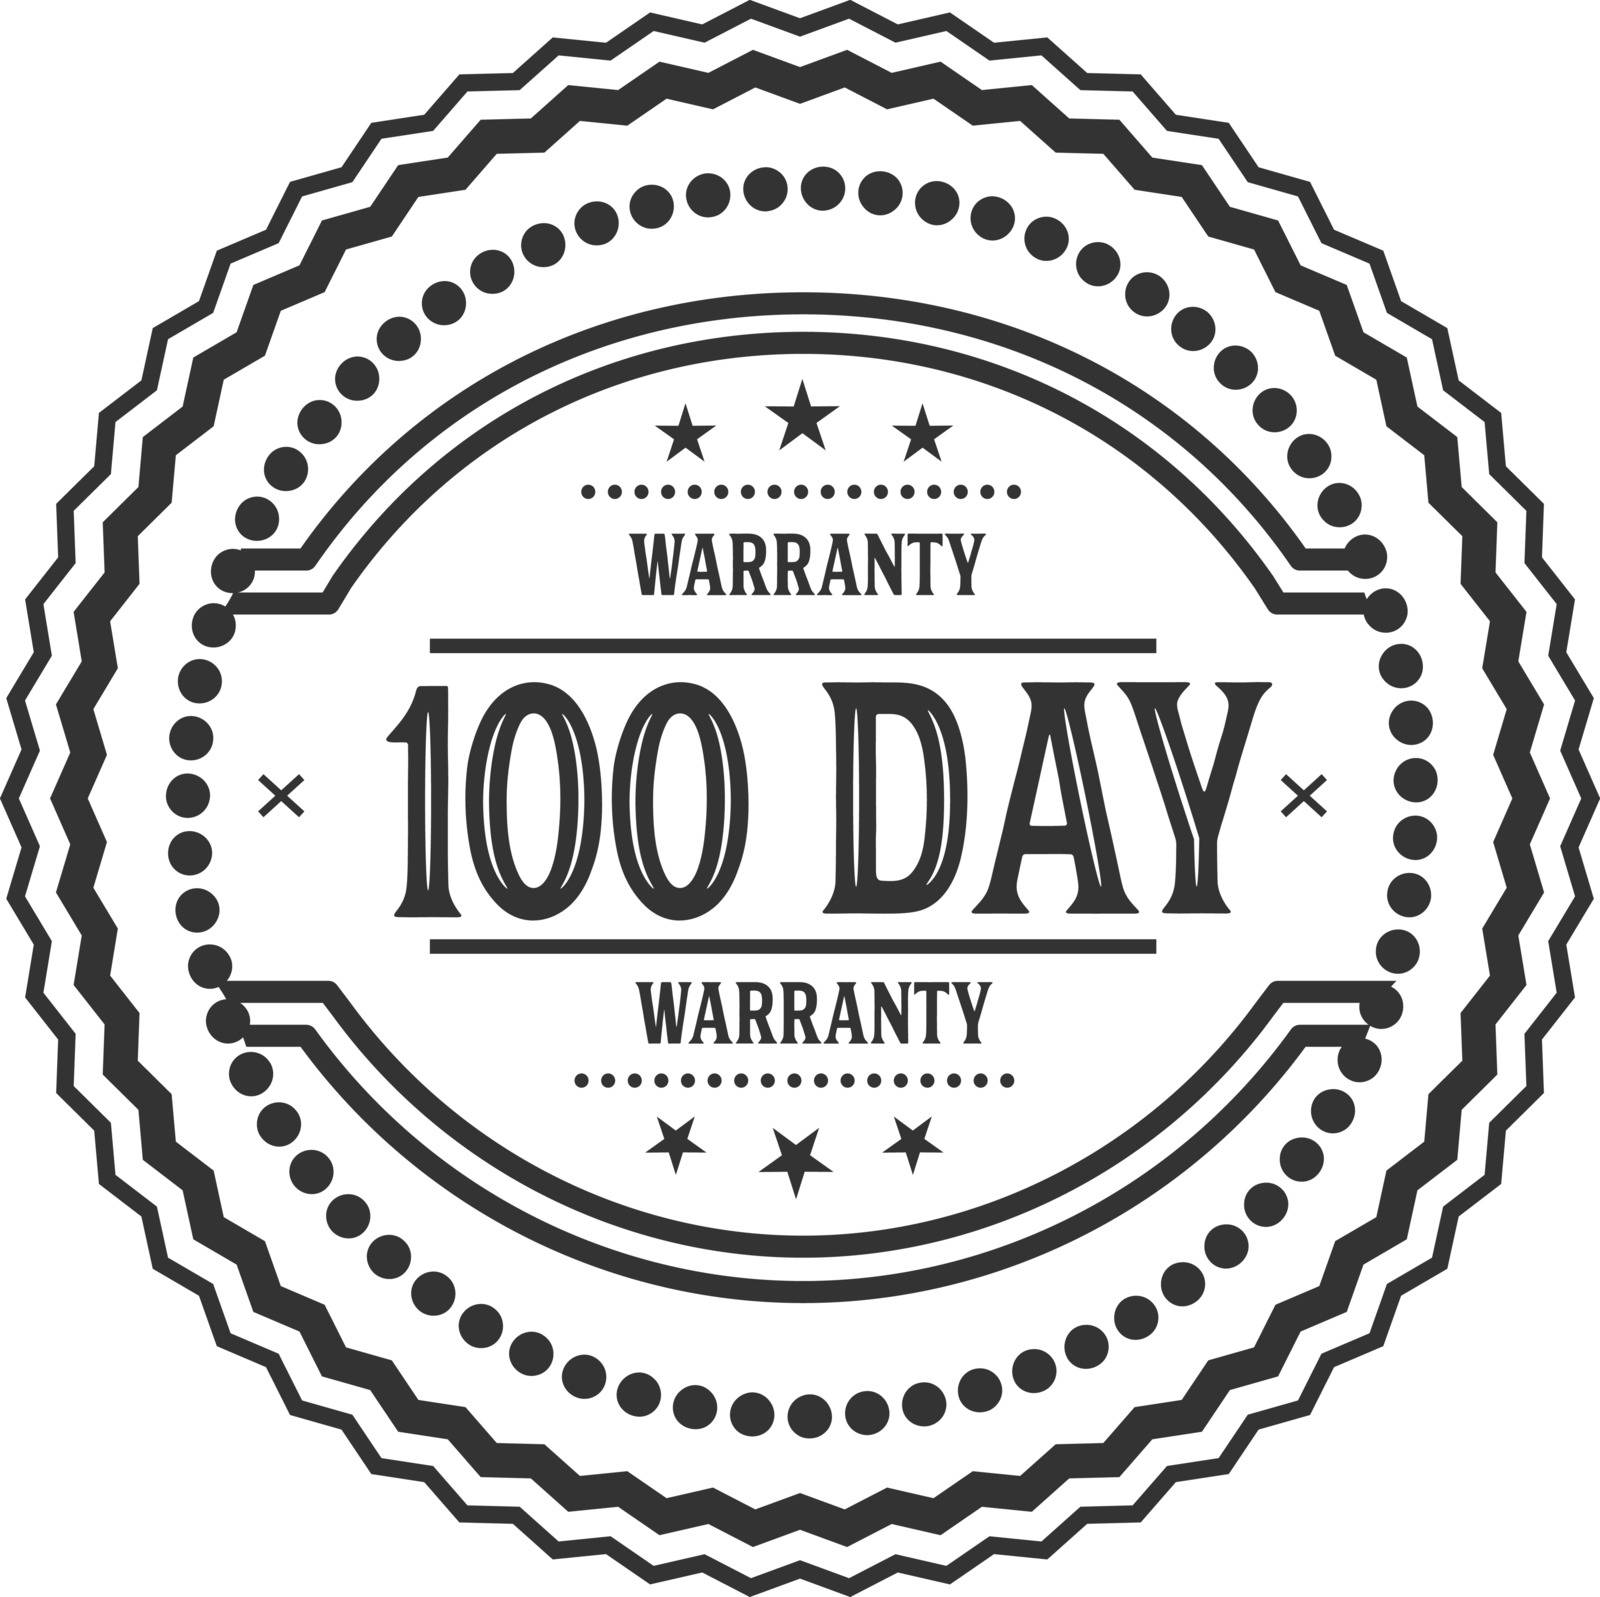 100 days warranty icon by teguh_jam@yahoo.com